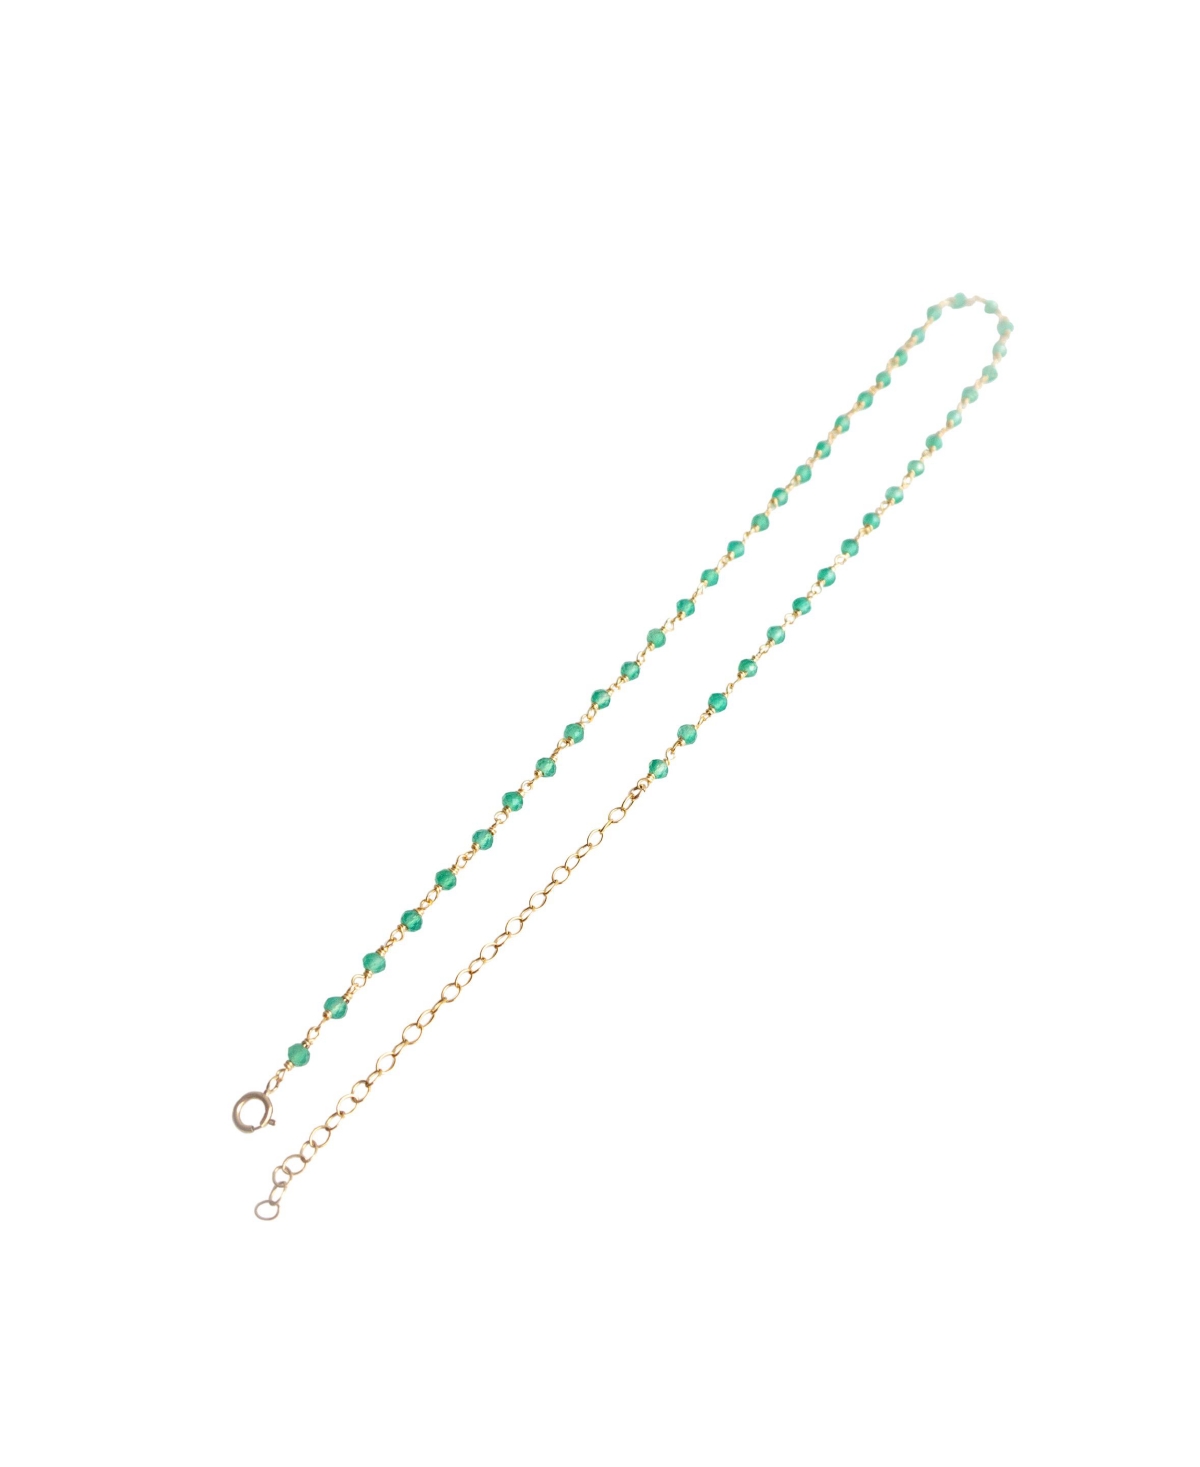 Hannah - Skinny bead choker necklace - Green